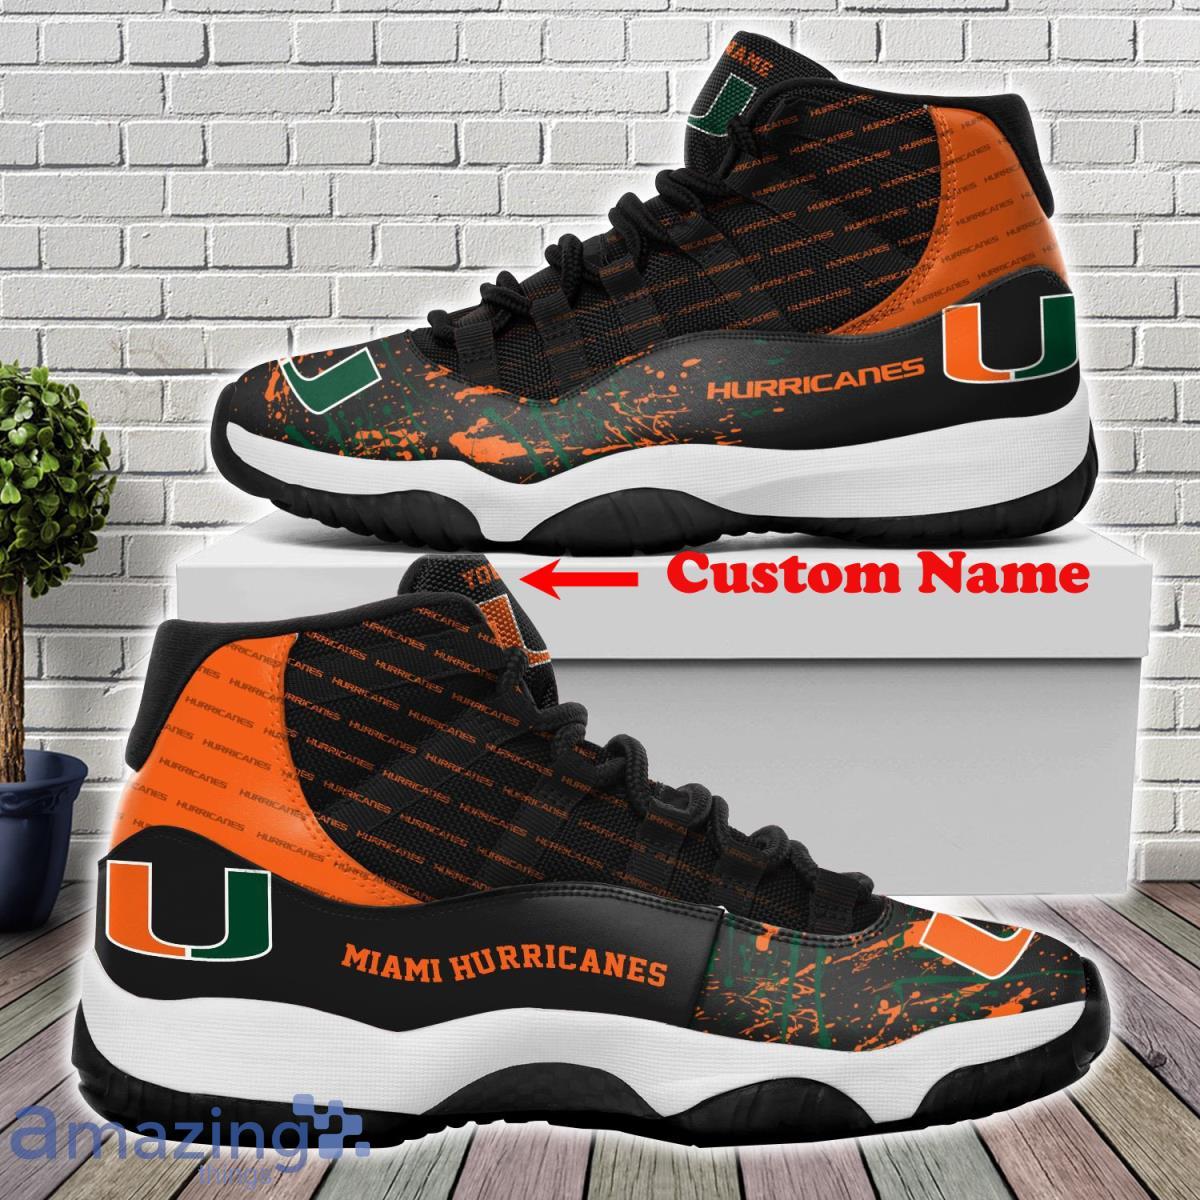 Miami Hurricanes Football Team Air Jordan 11 Custom Name Sneakers For Fans Product Photo 1